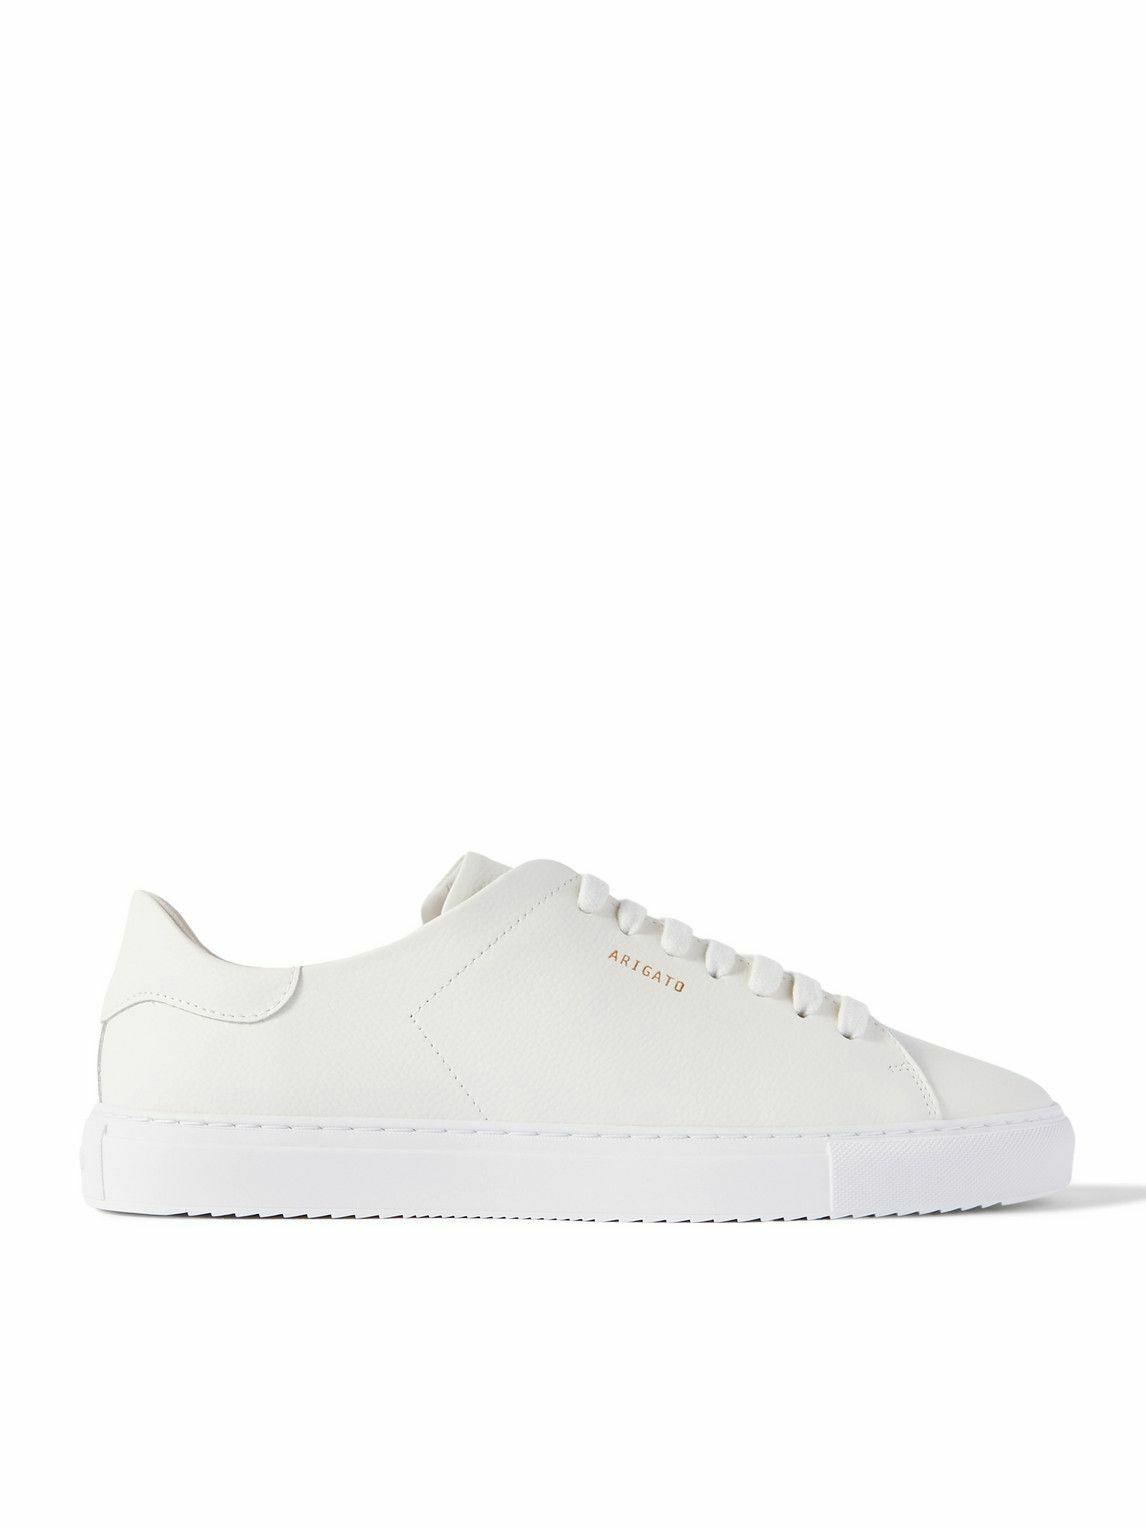 Axel Arigato - Clean 90 Full-Grain Leather Sneakers - White Axel Arigato